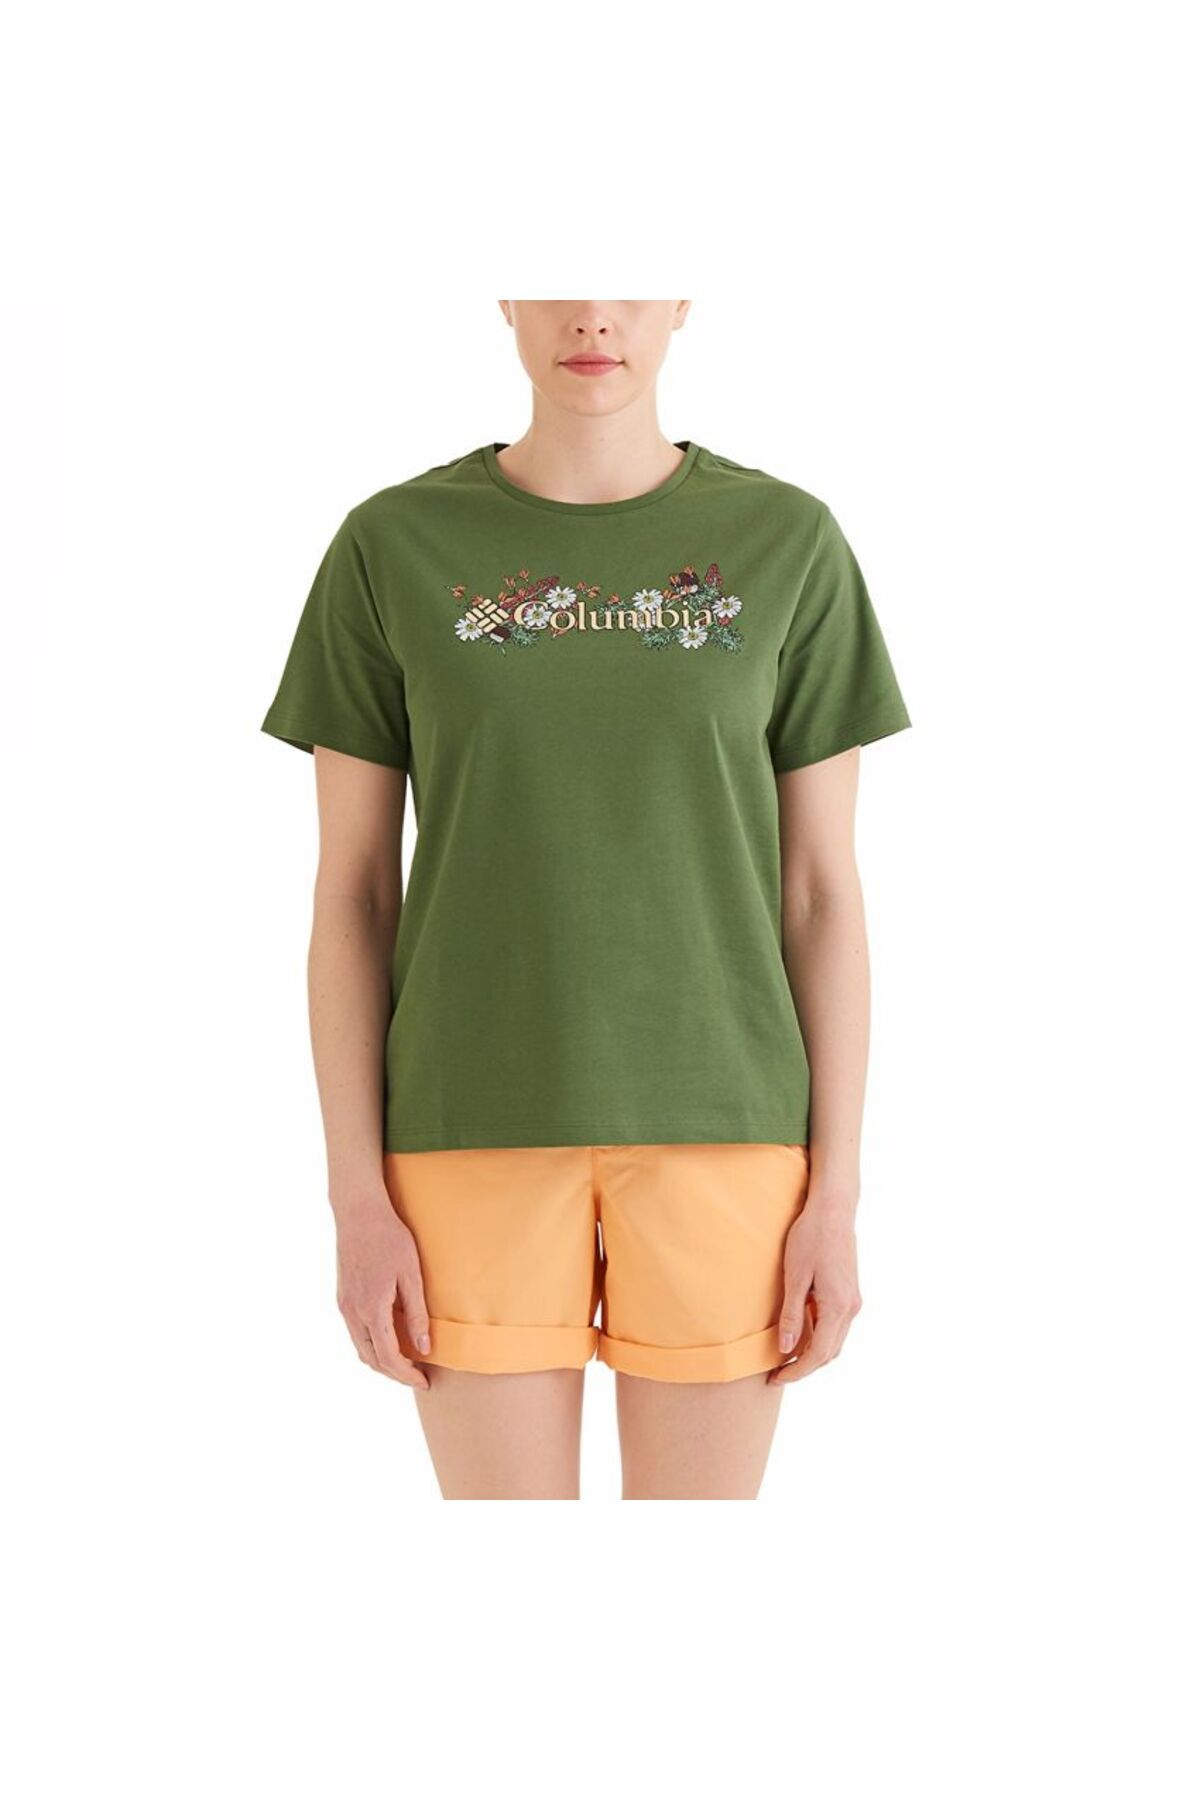 Columbia CSC North Cascade Kadın Kısa Kollu T-shirt Yeşil CS0366_352